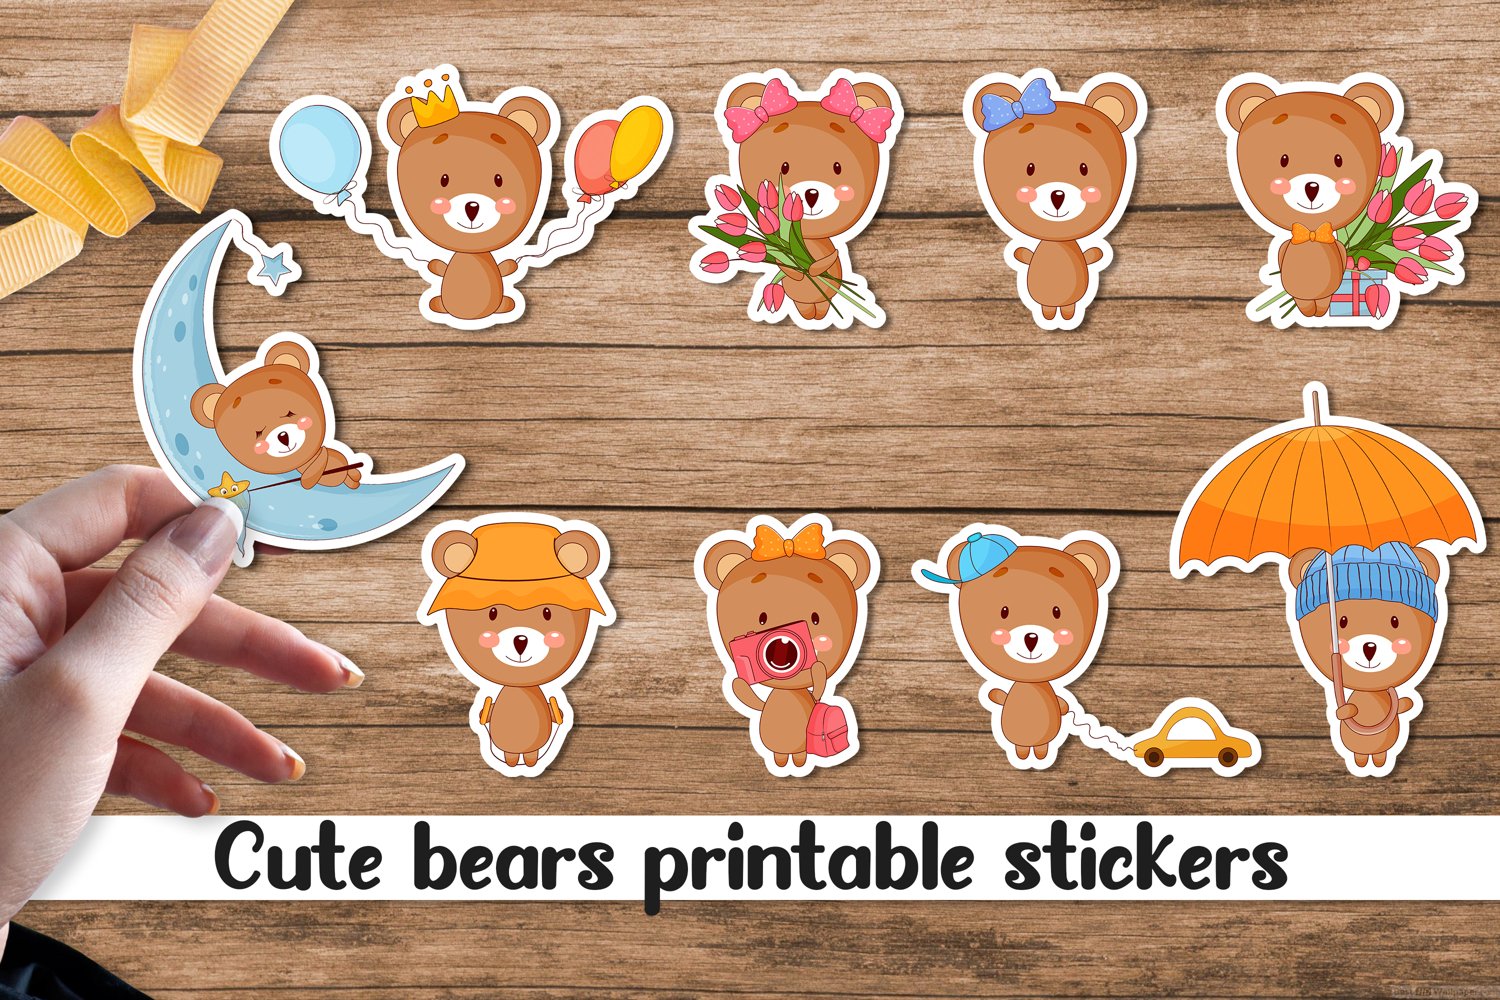 Cute bears printable stickers.